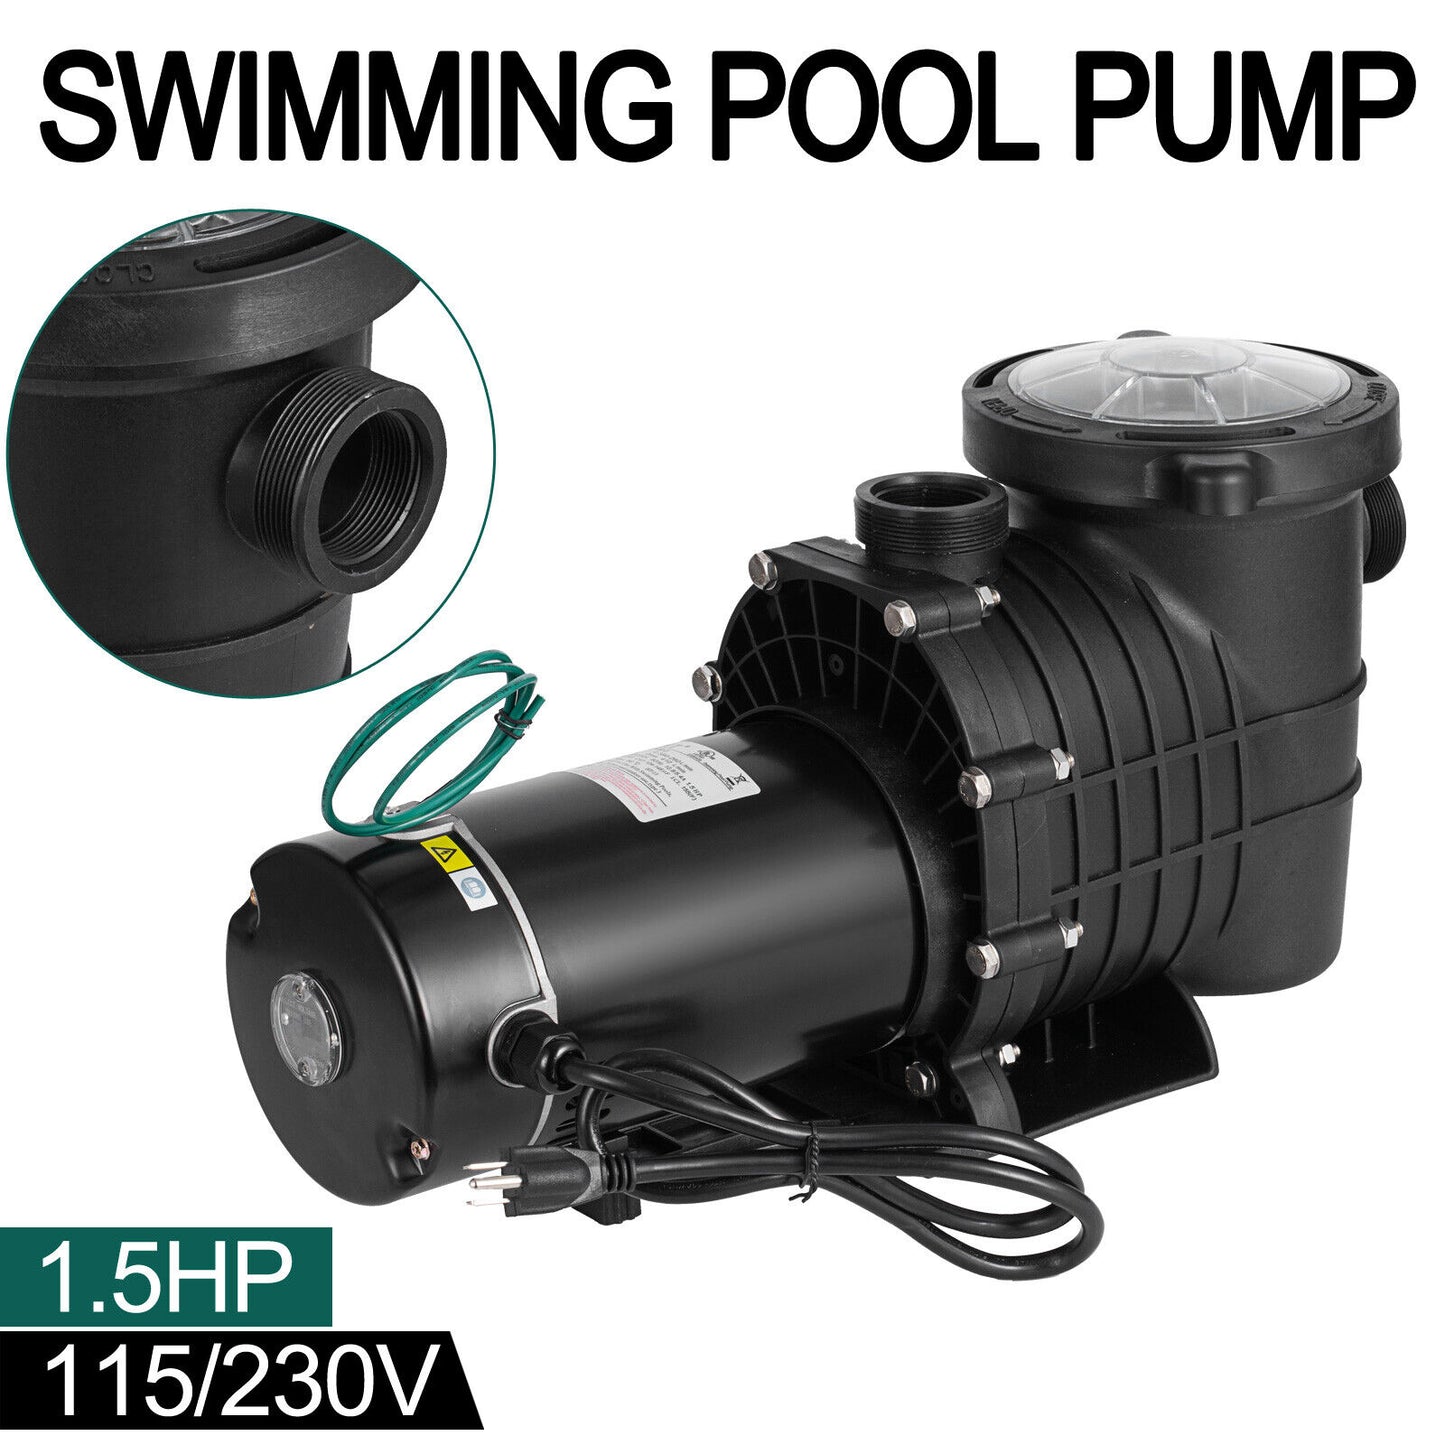 1.5HP Hayward Swimming Pool Pump Motor In/Above Ground w/ Strainer Filter Basket